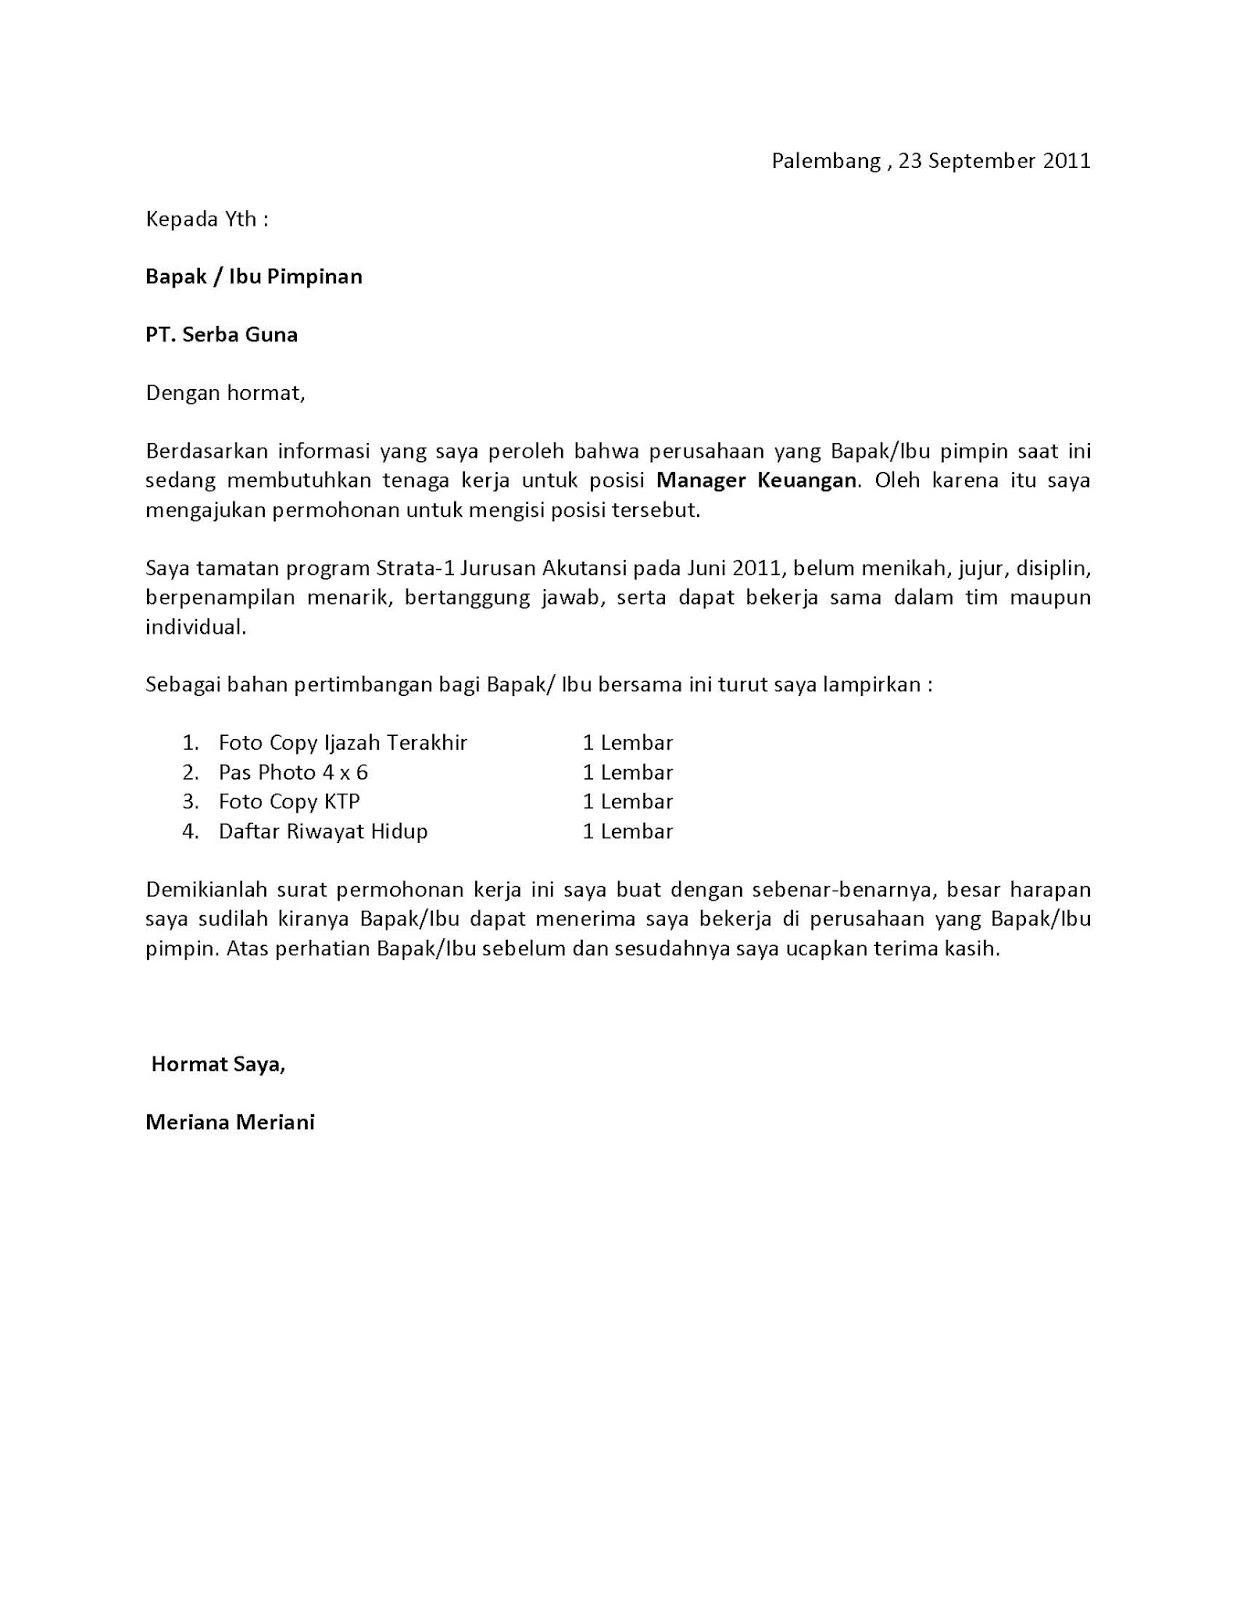 Contoh Surat Lamaran Dan Pernyataan Pemerintahan Kota Palembang